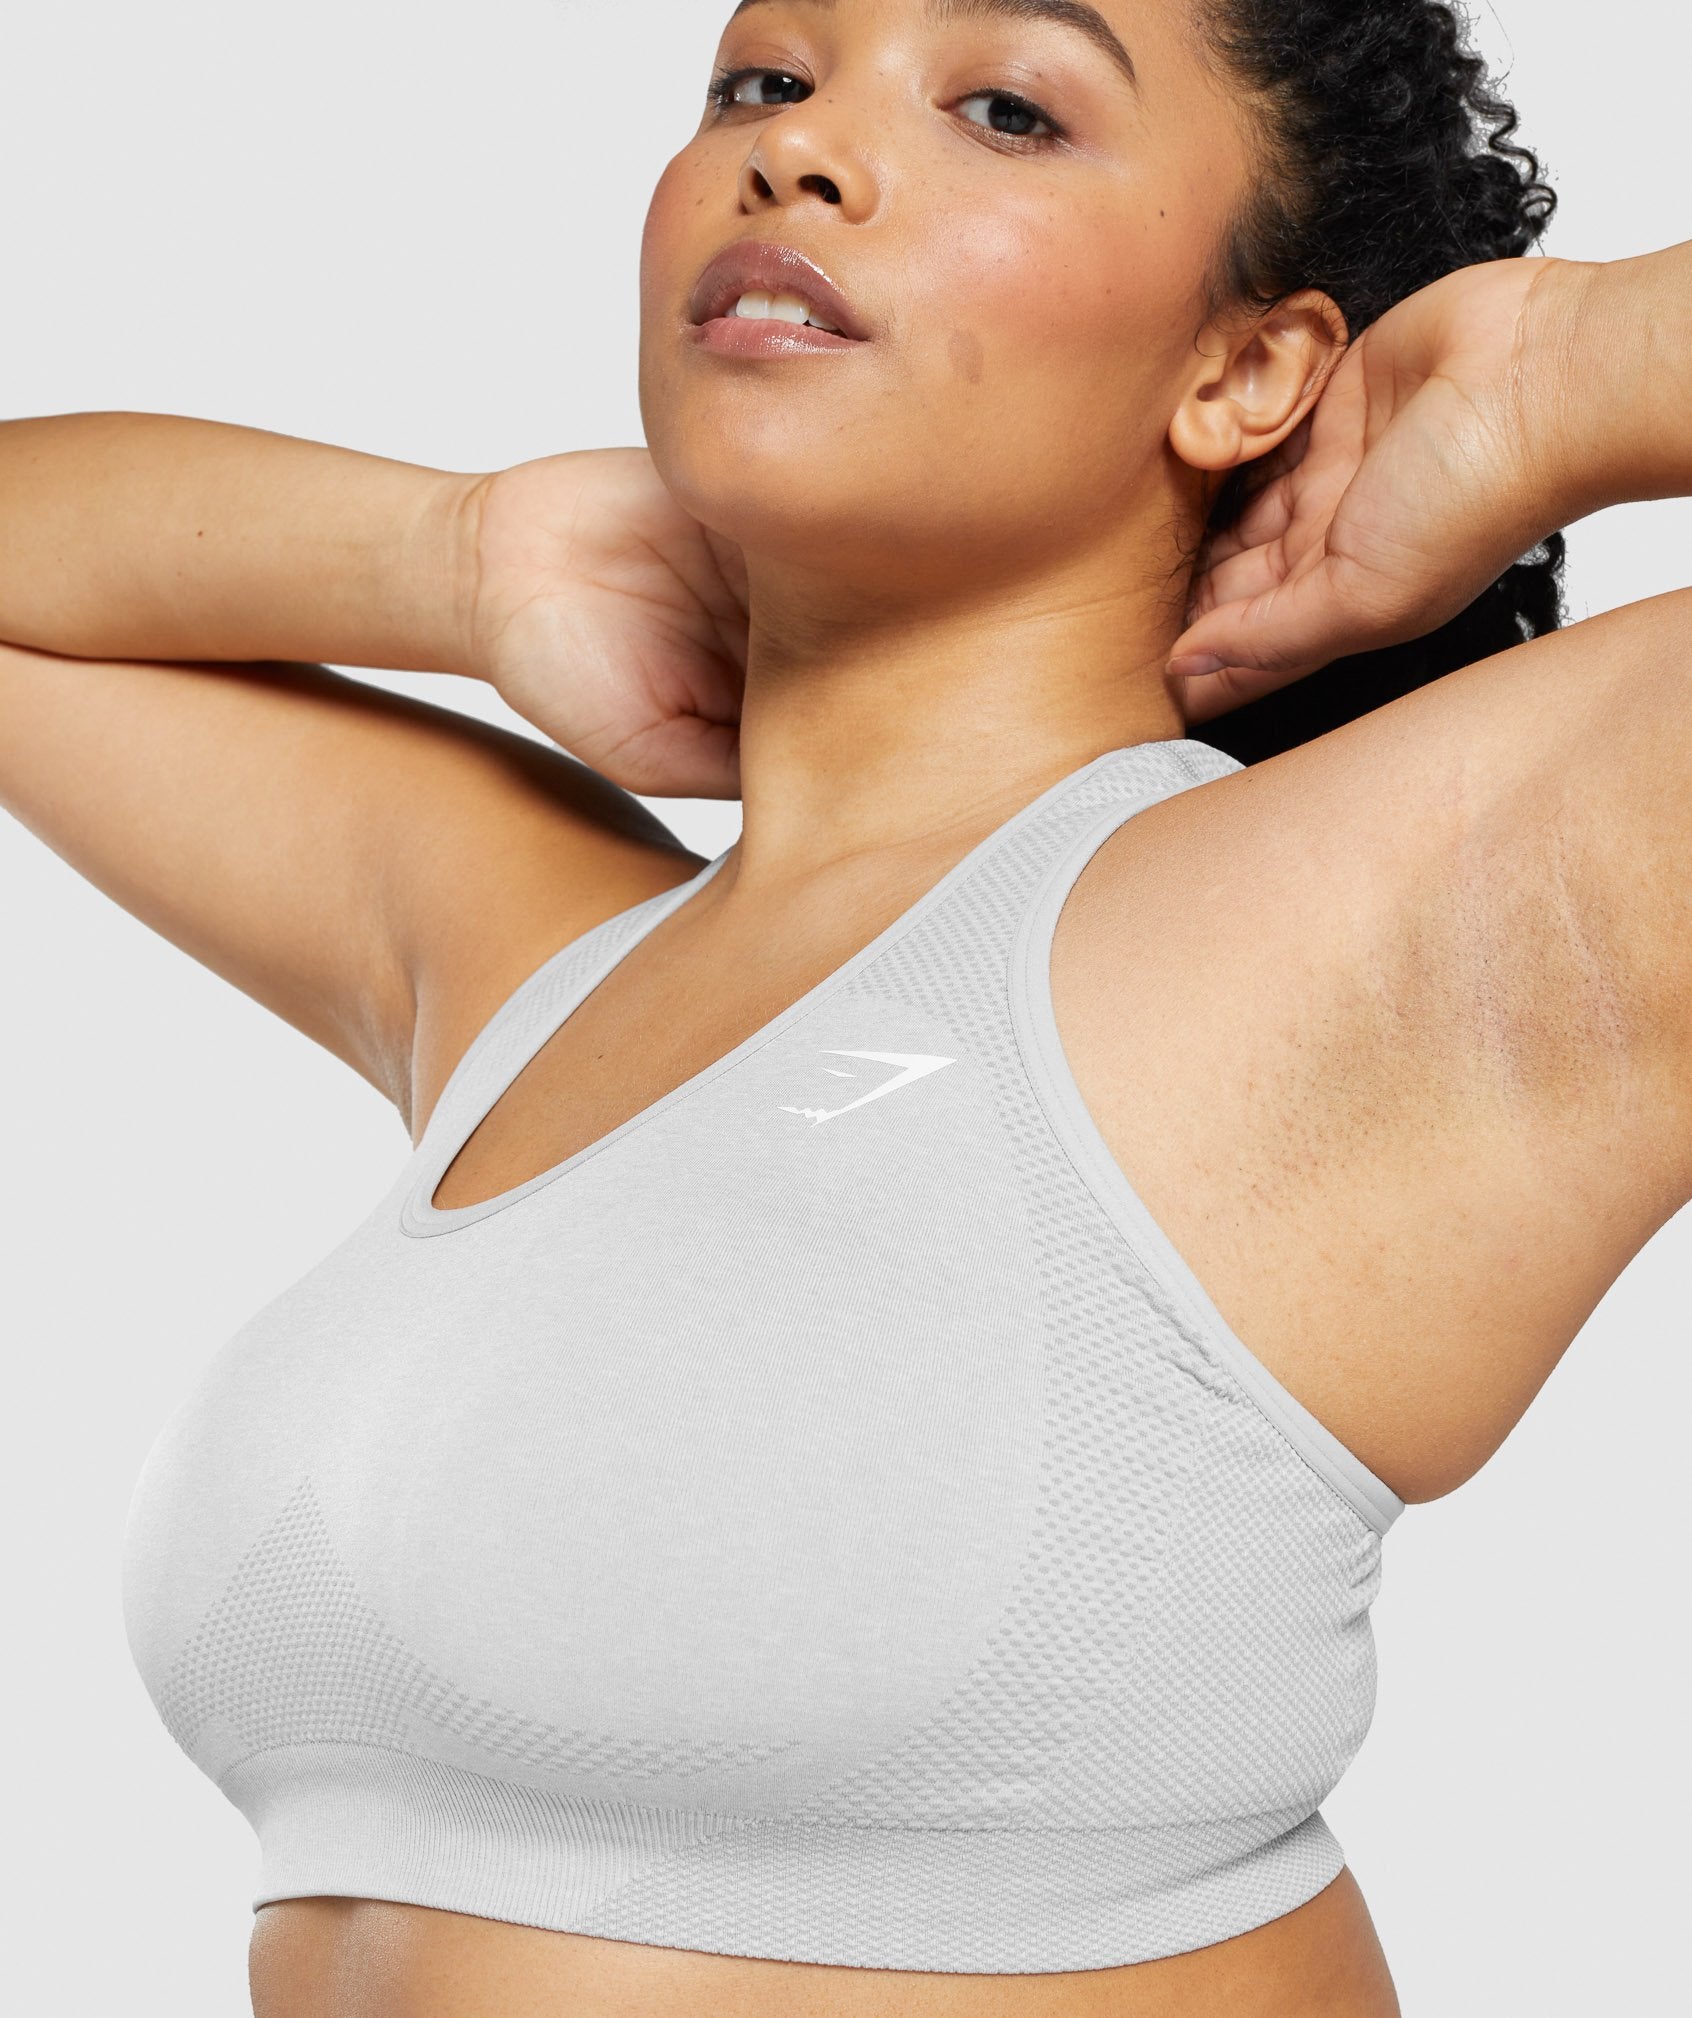 Gymshark vital seamless sports bra Size M - $28 - From Monse